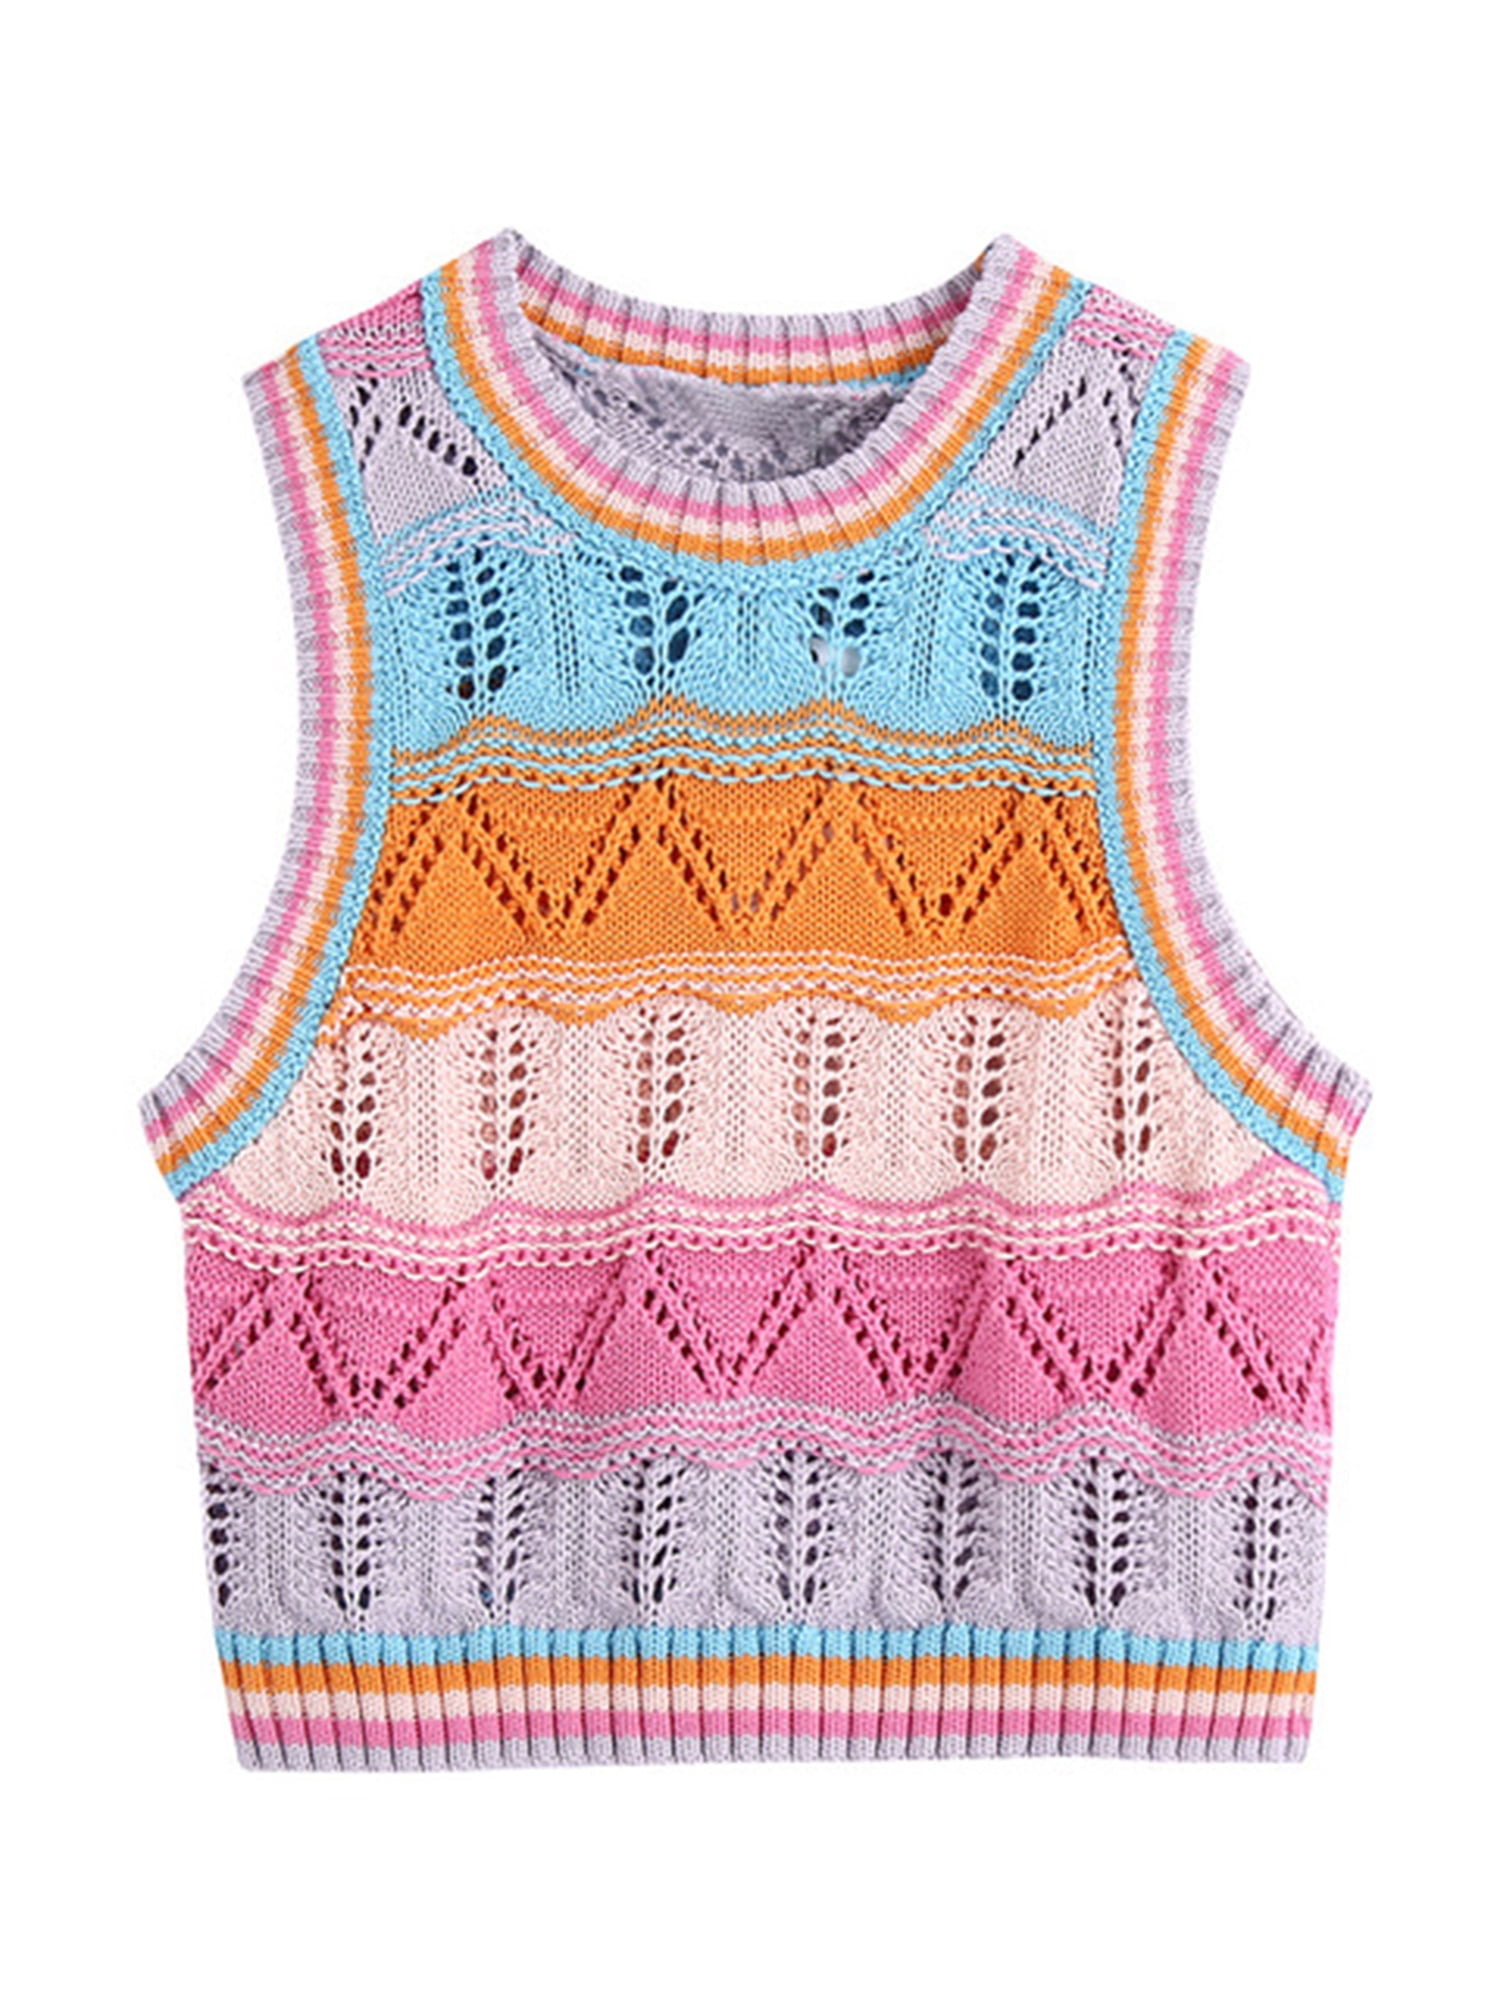 Women's Crochet Knit Sweater Vest Striped Color Tank Tops Sleeveless Round Neck Crop Vest 90s Vintage E-girls Outfits